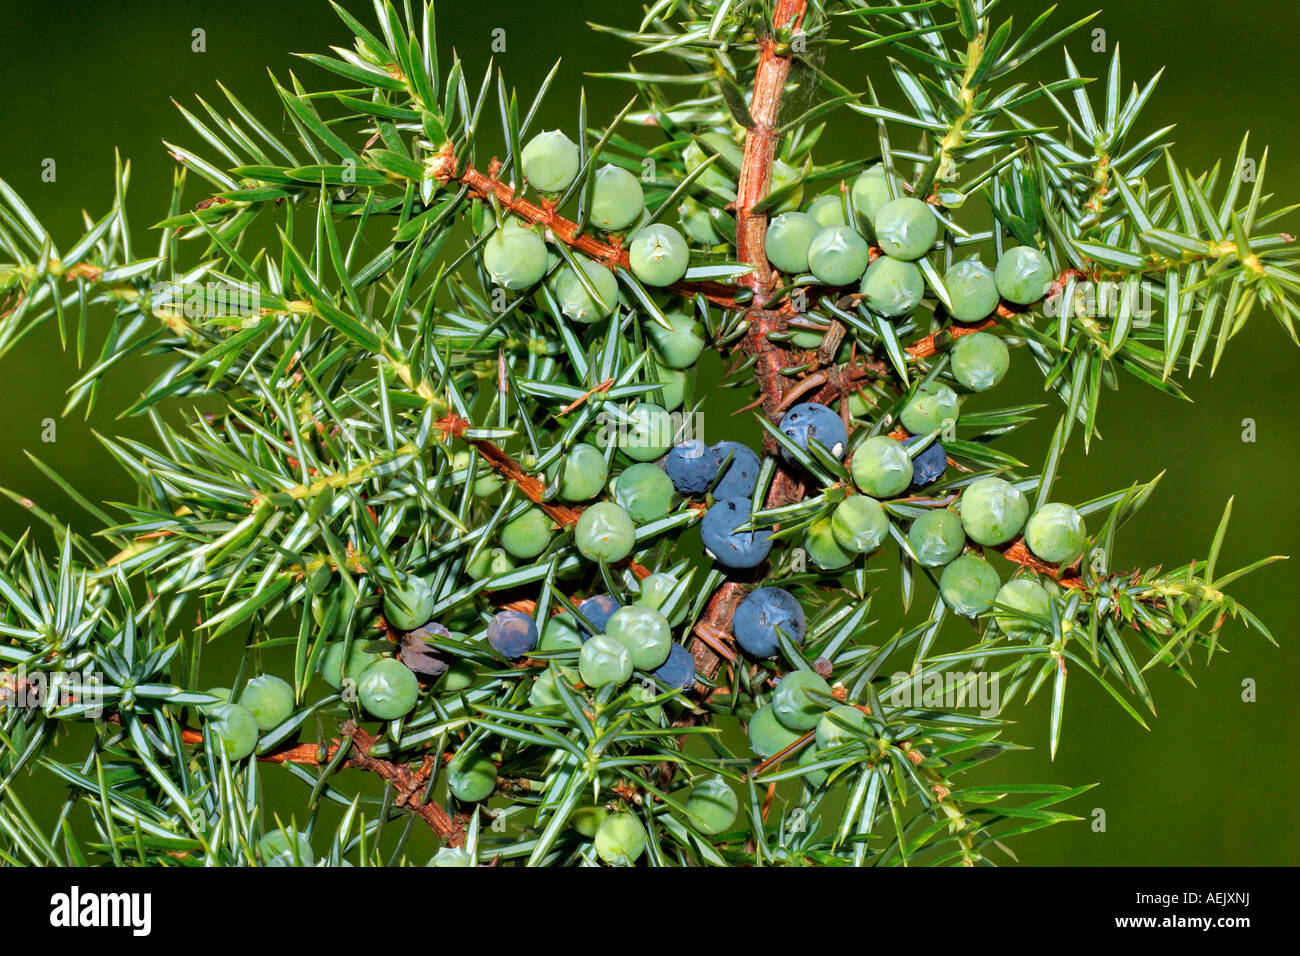 Common juniper - branch with fruits - juniper berrys (Juniperus communis) - Lueneburg heath, Lower Saxony, Germany, Stock Photo